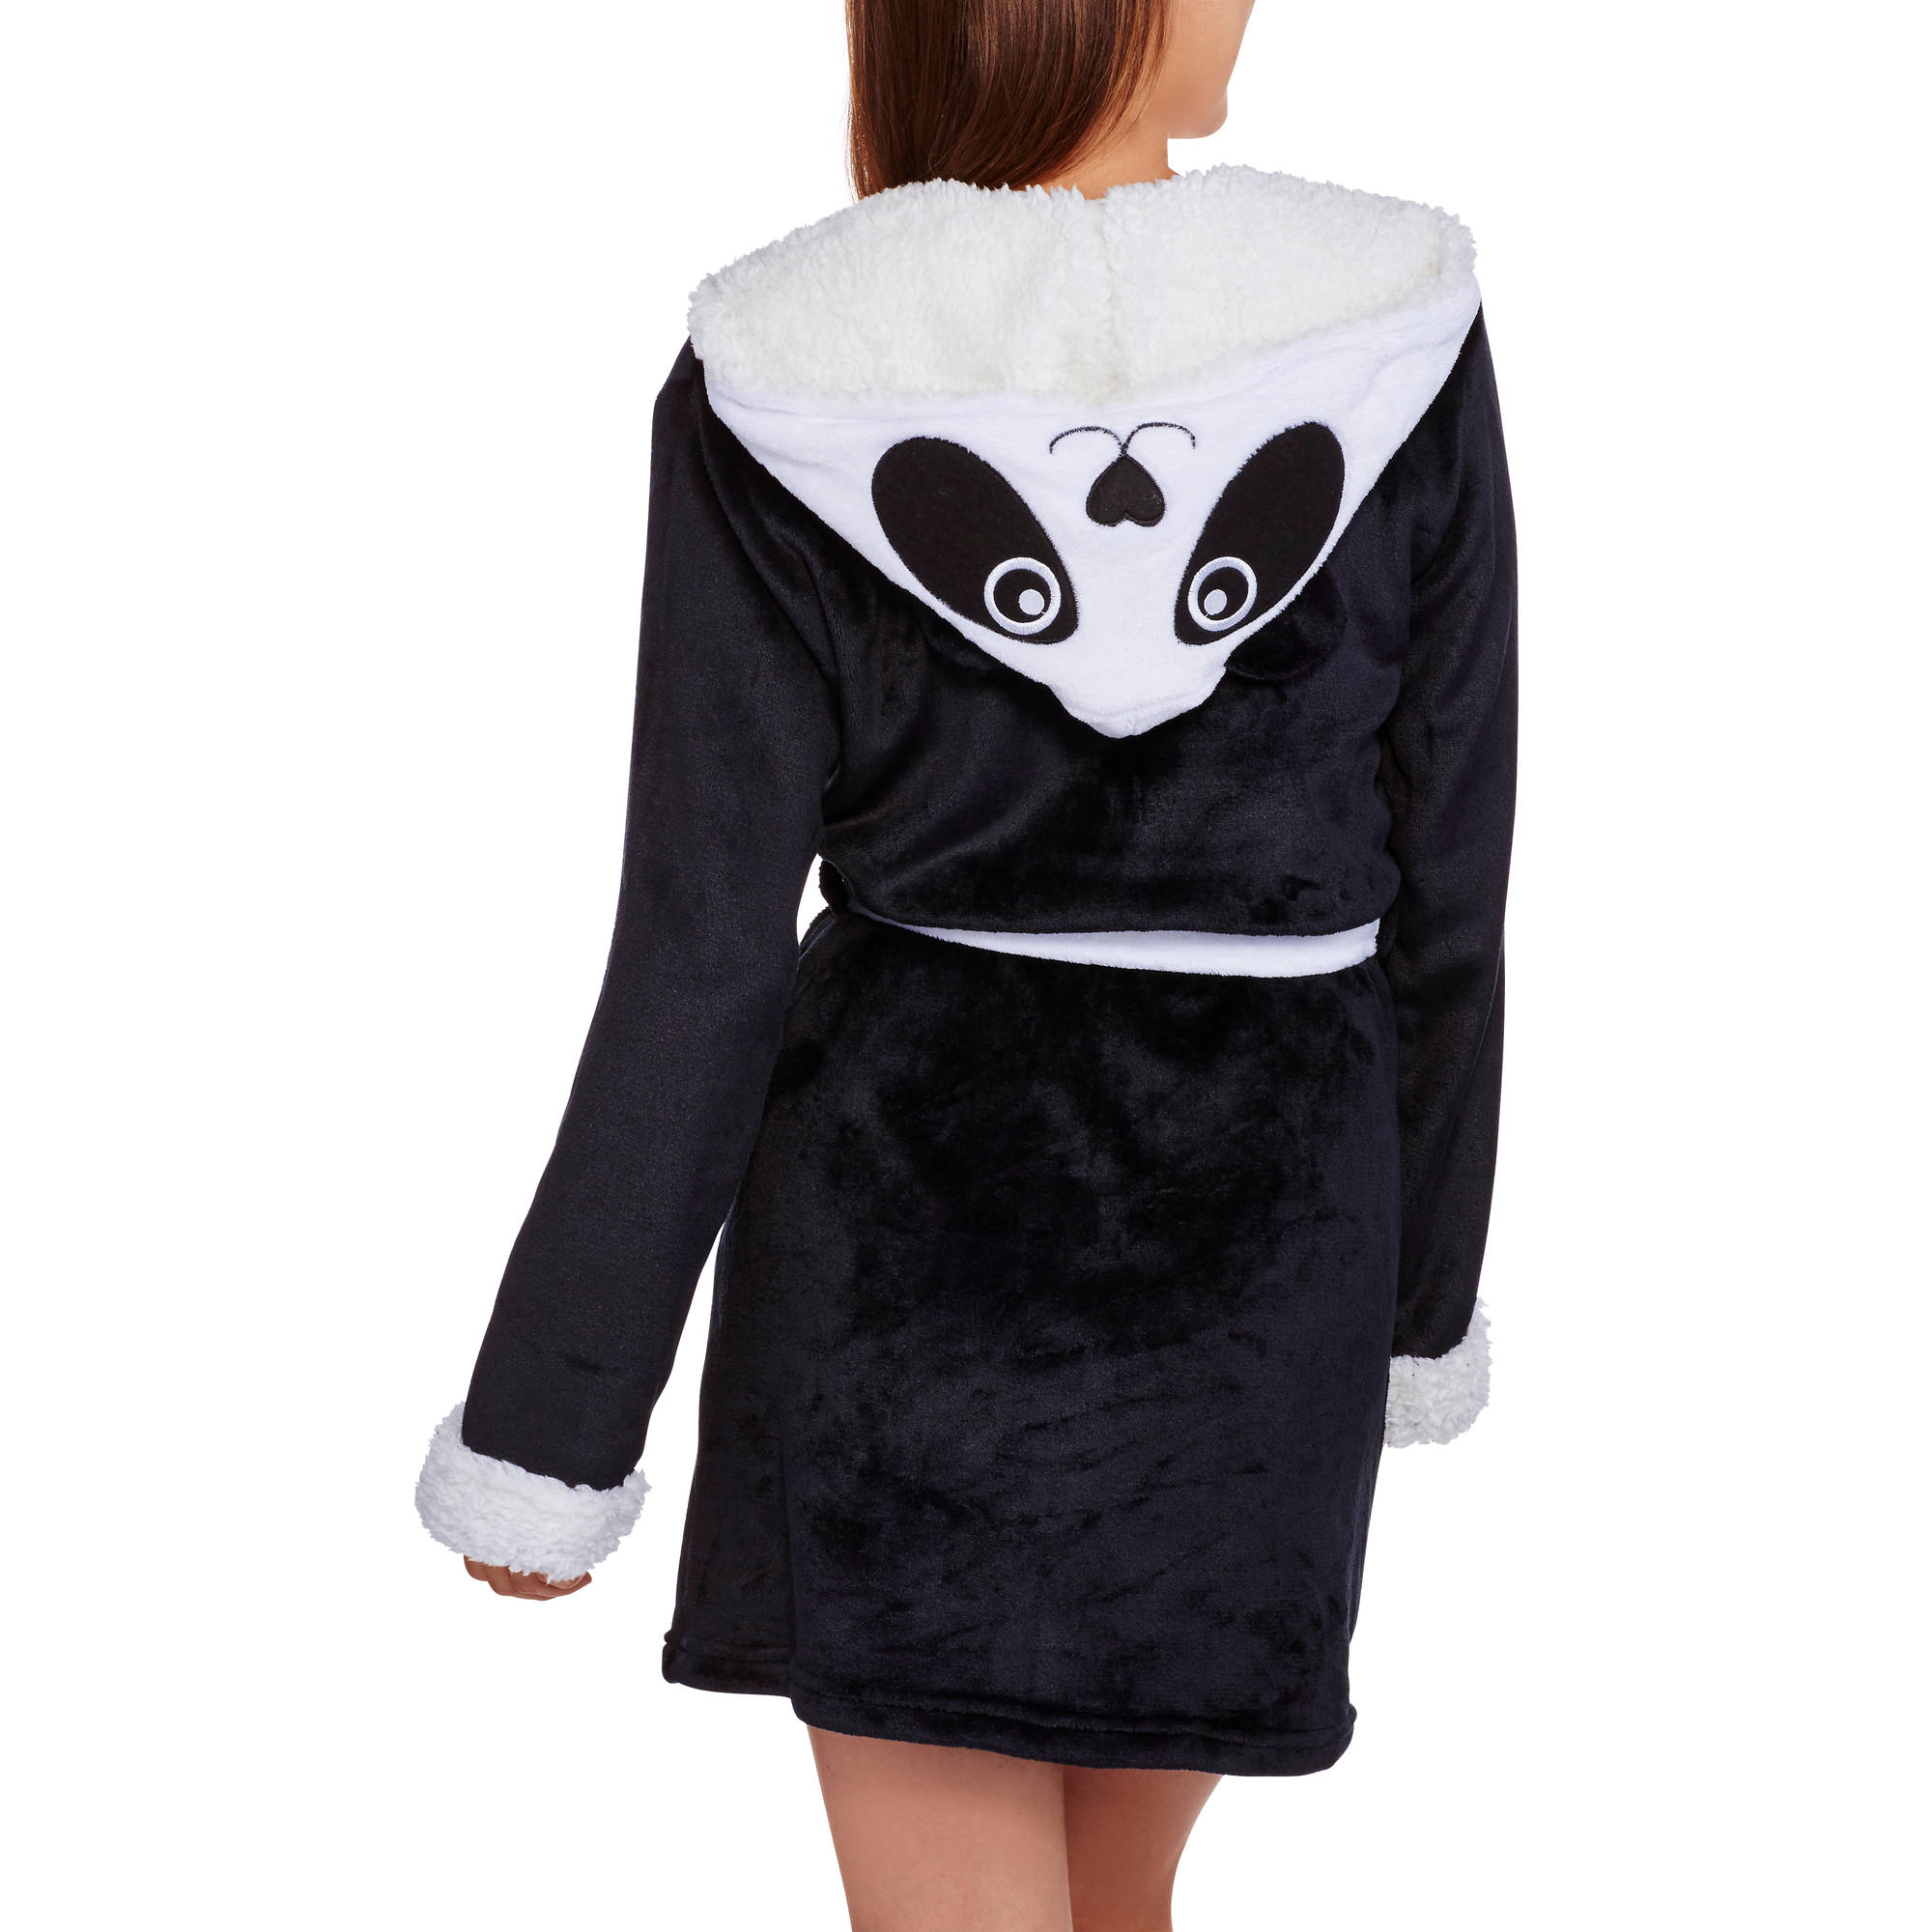 Body Candy Huggable Luxe Critter Sleepwear Robe - image 2 of 2